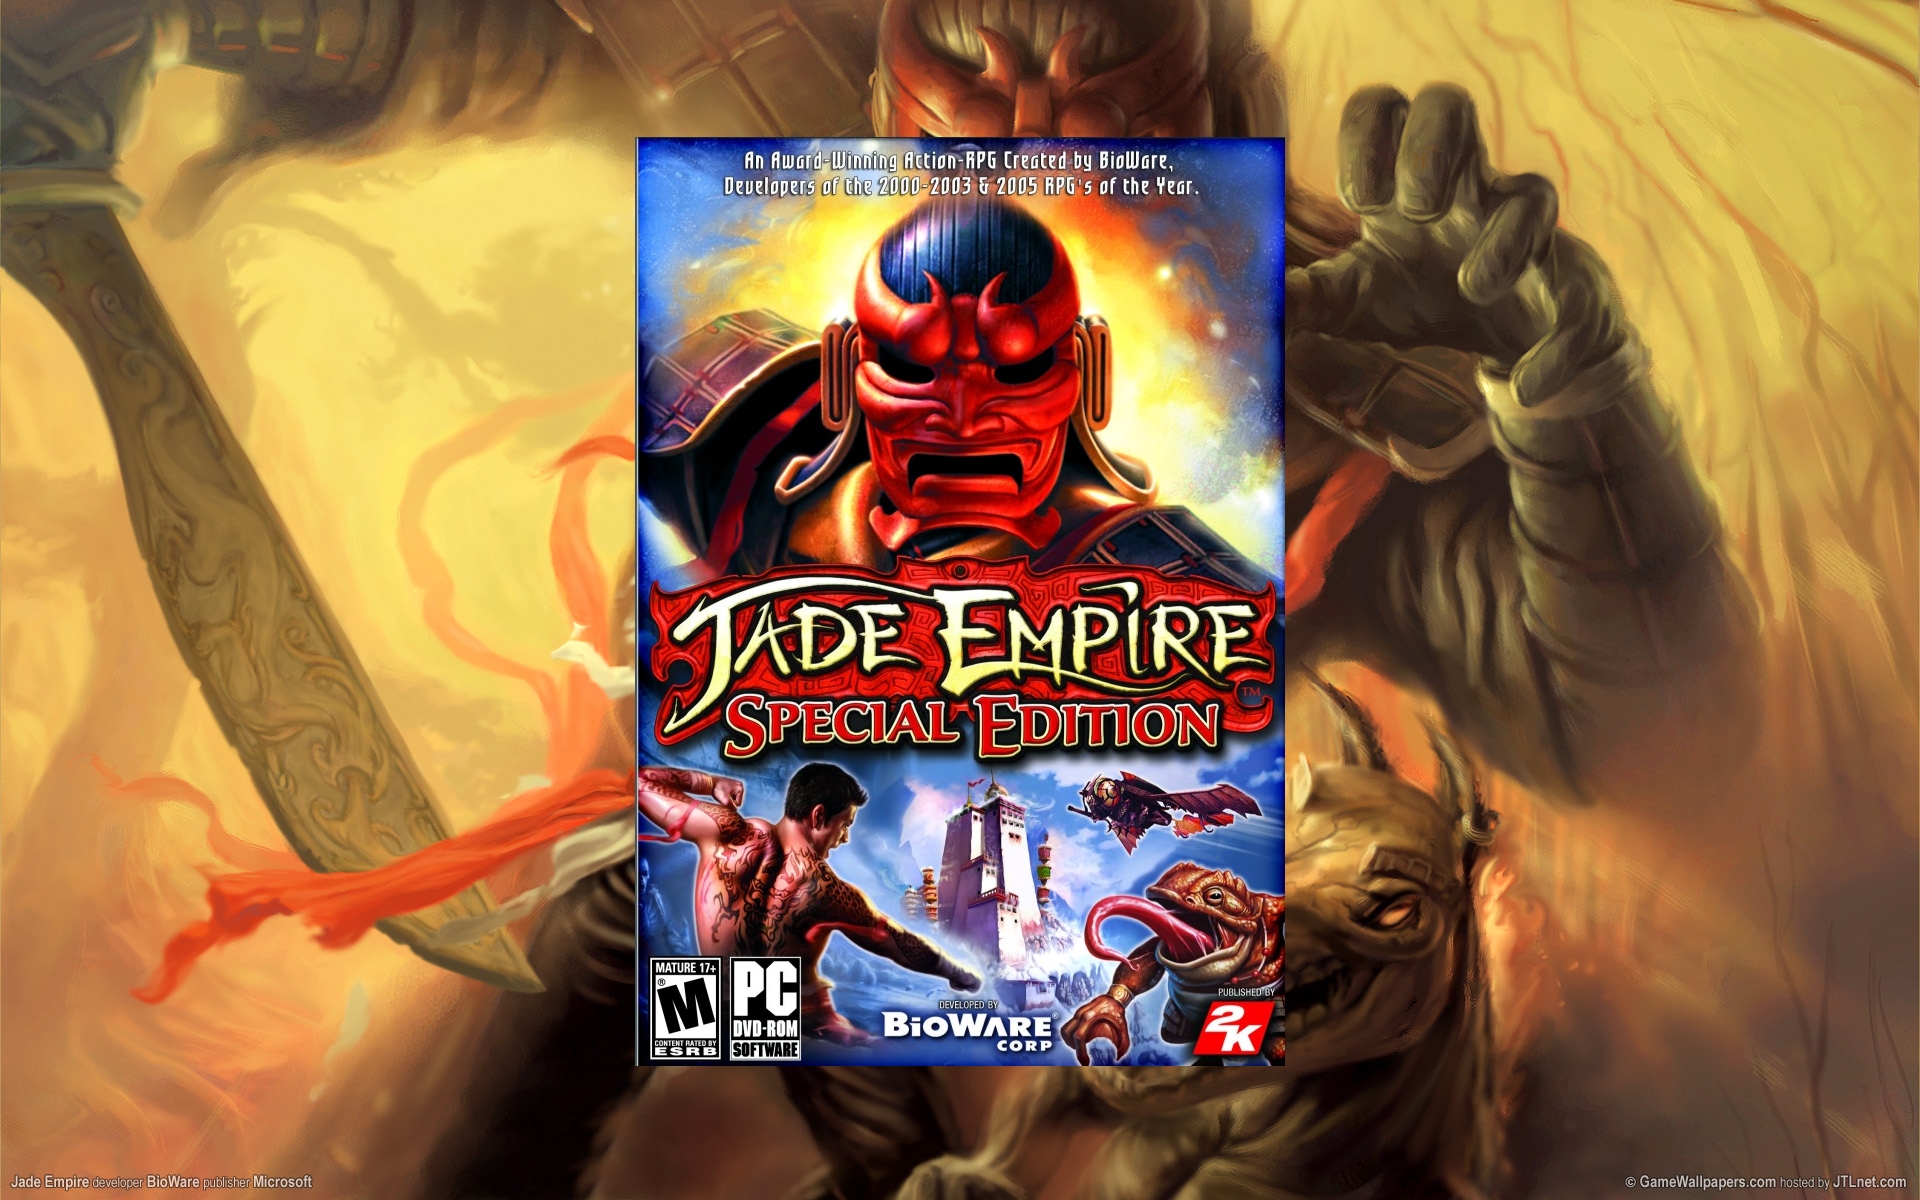 jade empire special edition | Origin | EA แจกฟรี! เกมในตำนานประมาณ 10 ปีก่อน 'Jade empire special edition' เกมตัวเต็มเวอร์ชั่น PC เปิดจำหน่ายราคา 0 บาทในเวลาจำกัด [วิธีดาวน์โหลดด้านใน]